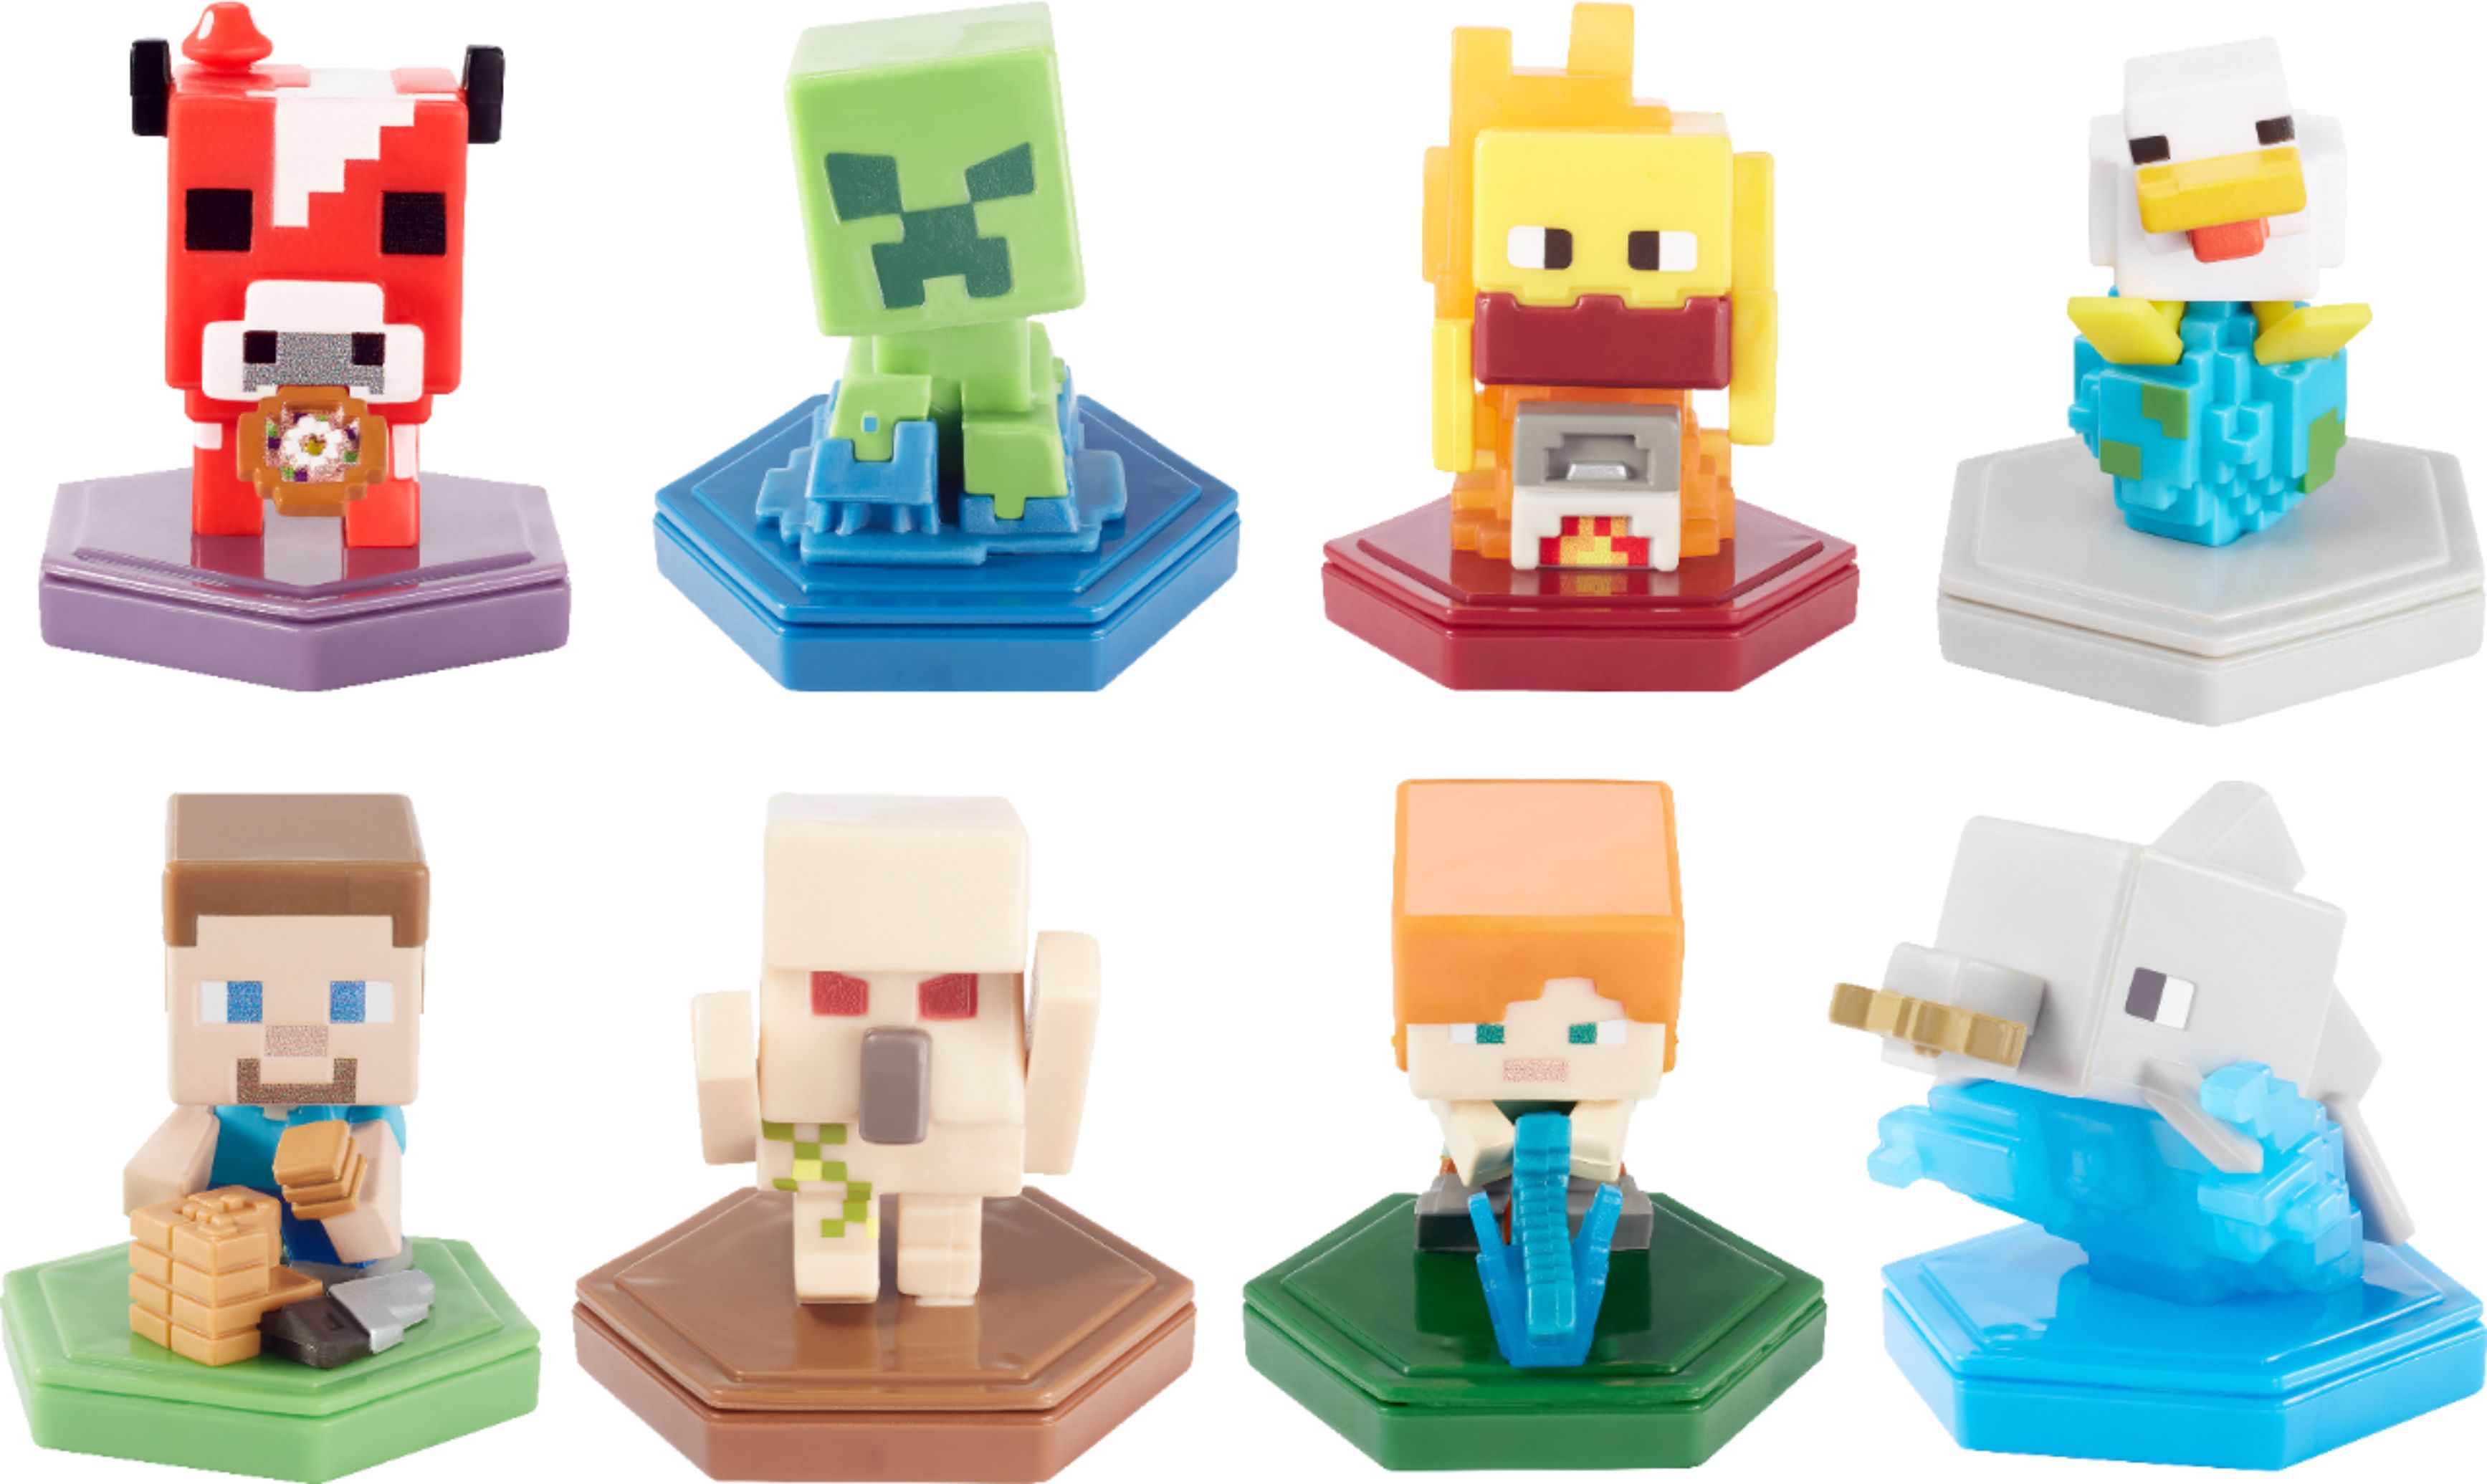 Best Buy: Mattel Minecraft Earth Boost Mini Figure Styles May Vary